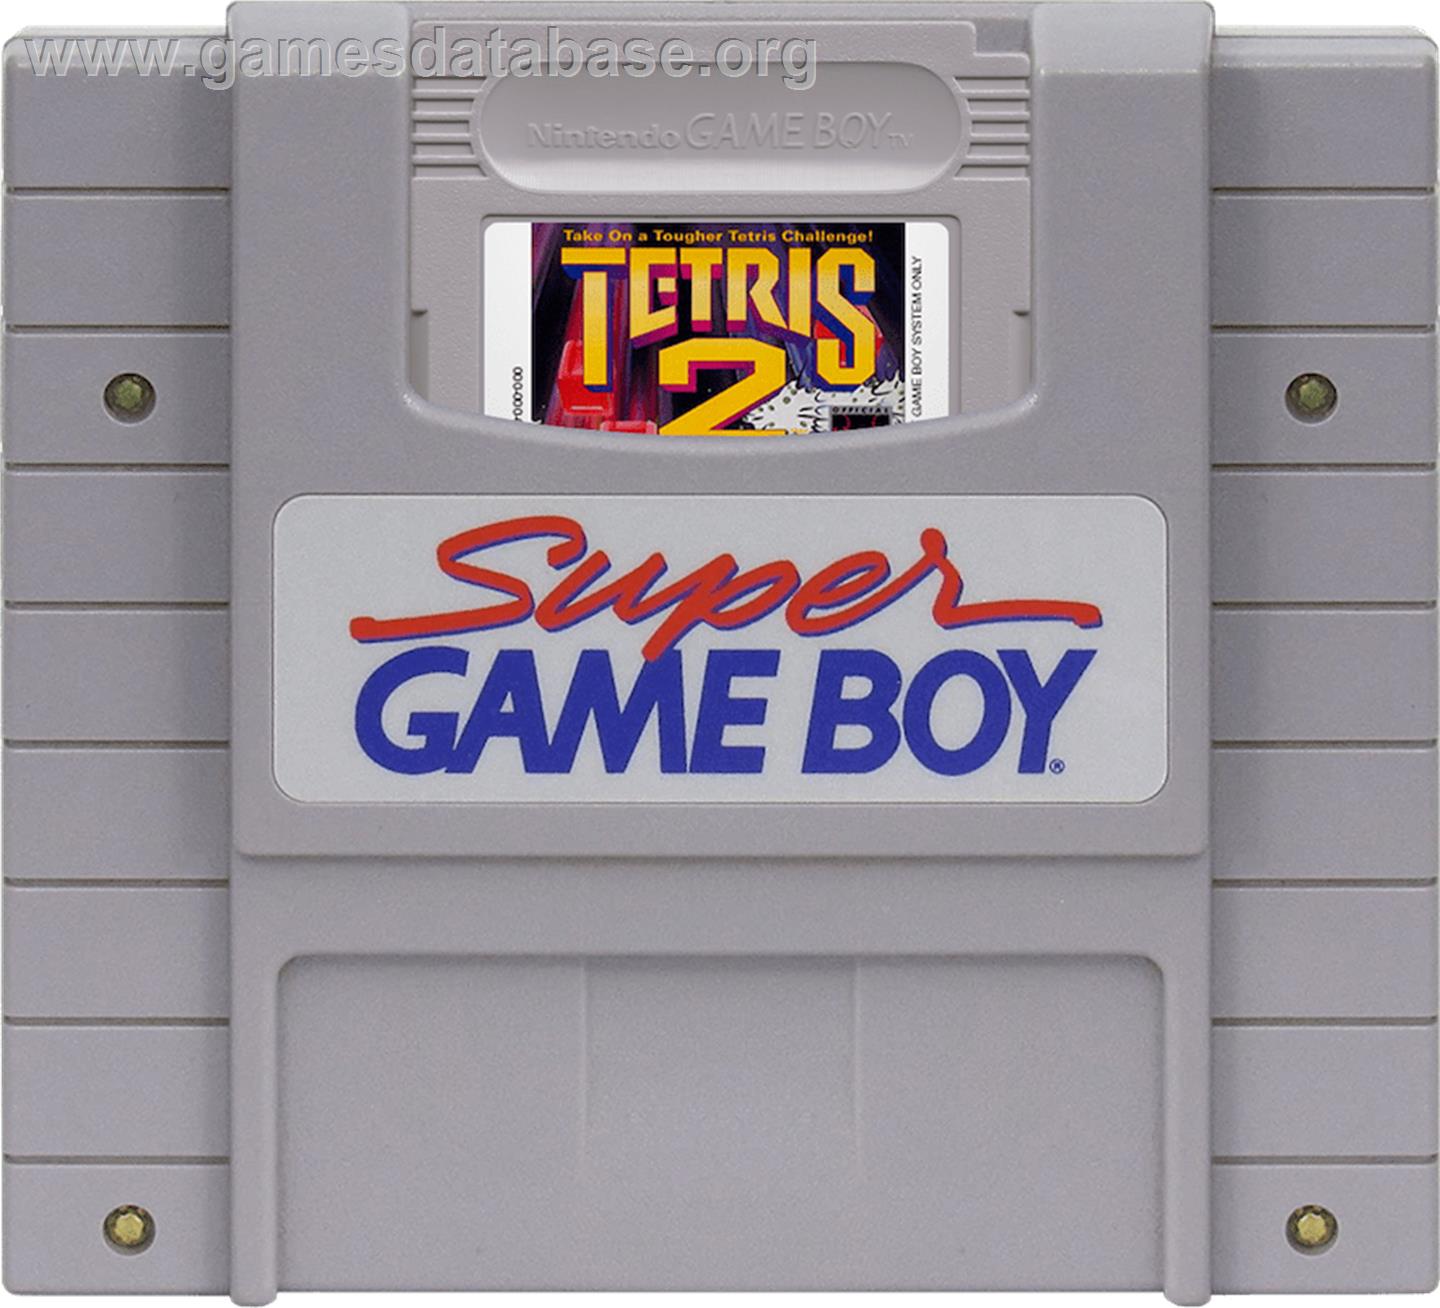 Tetris 2 - Nintendo Super Gameboy - Artwork - Cartridge